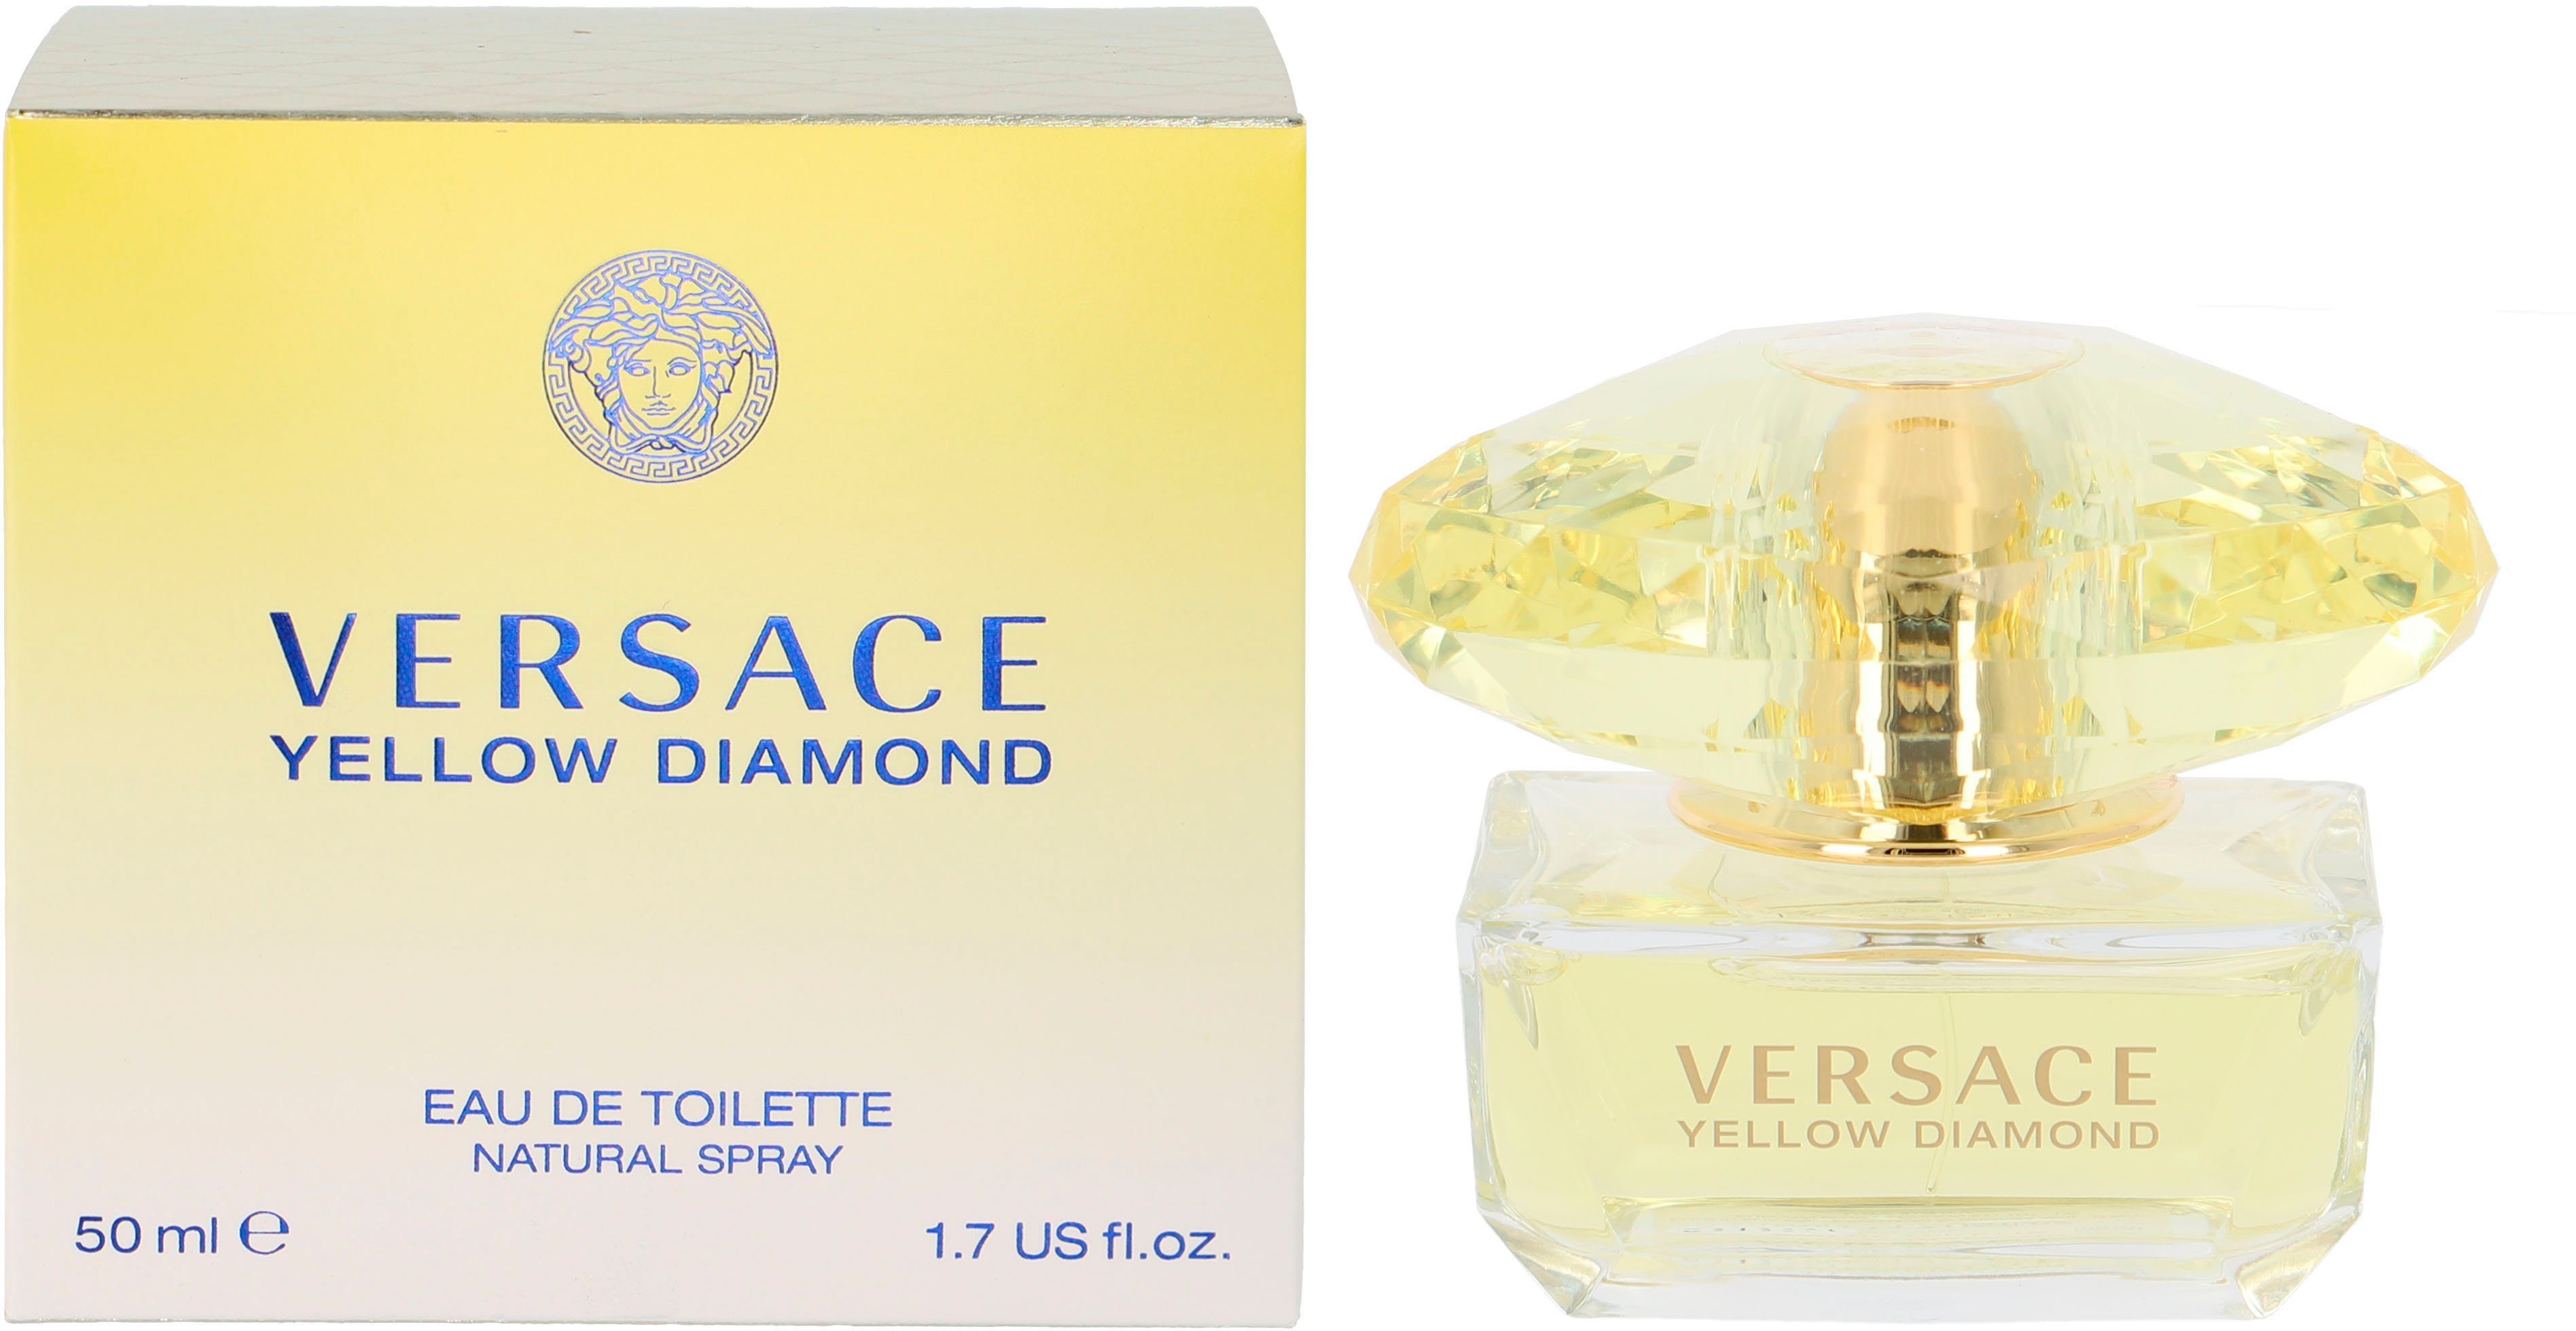 Versace Eau Diamonds Toilette de Yellow